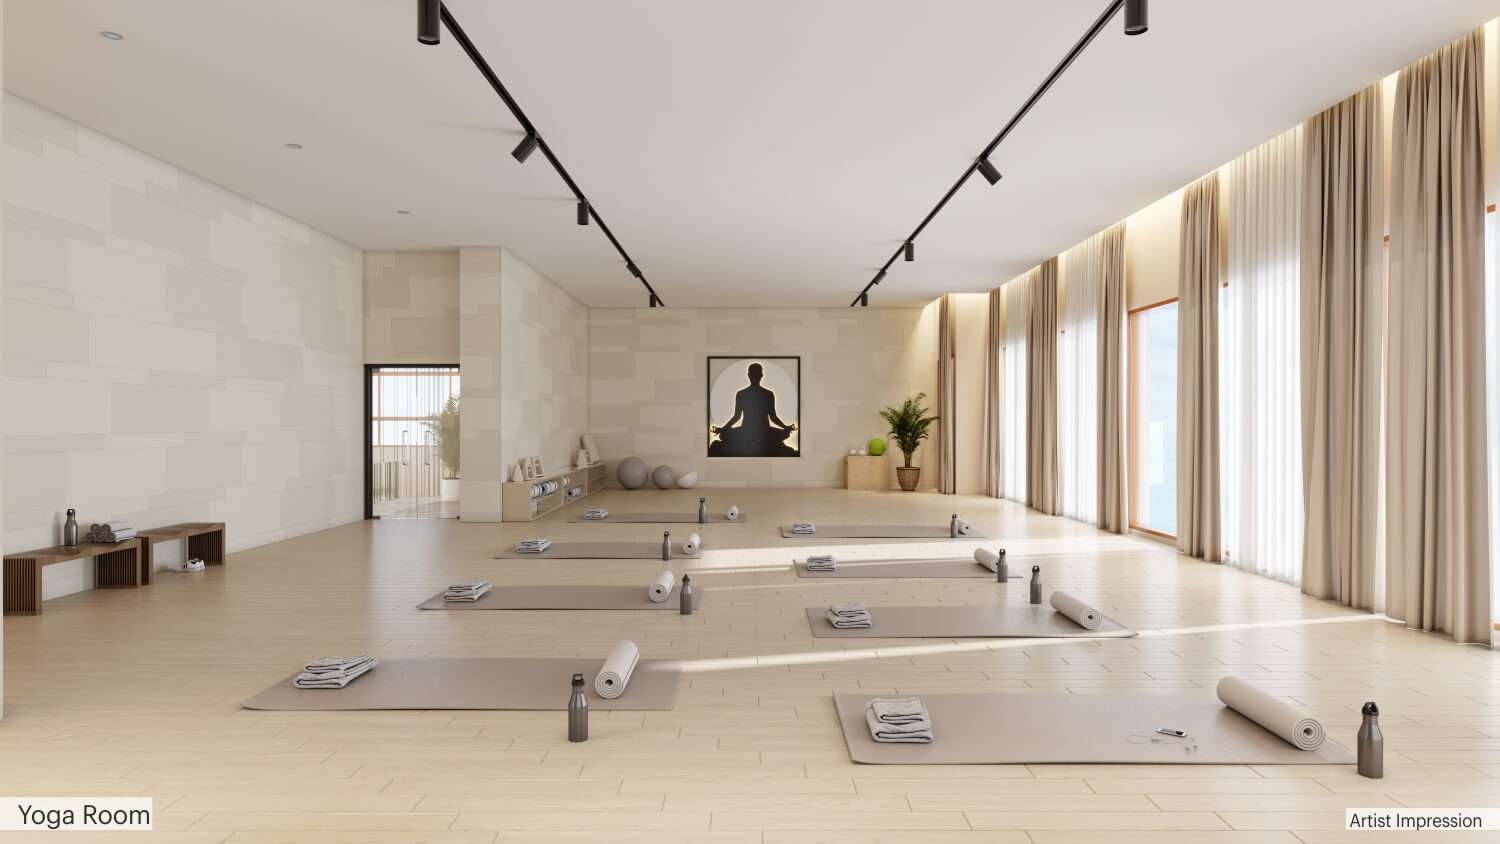 5. Yoga Room